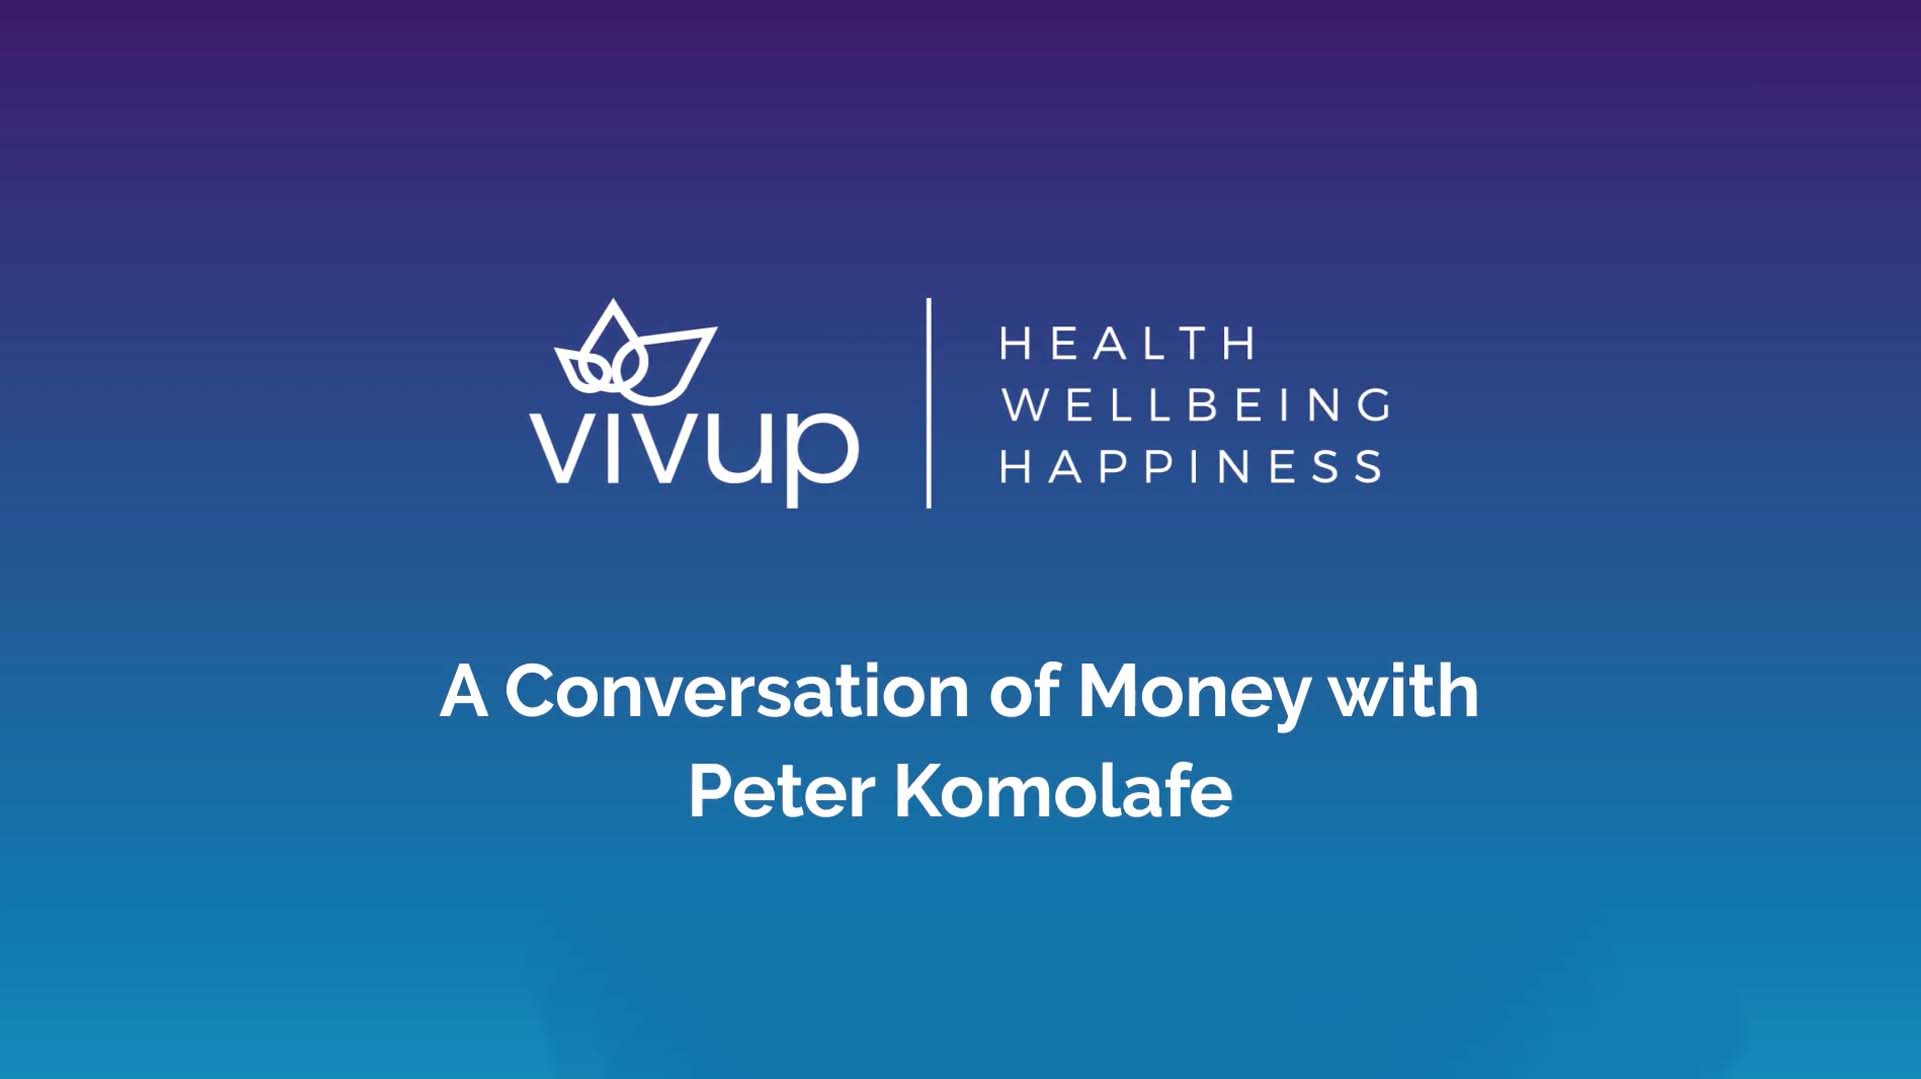 A Conversation of Money podcast